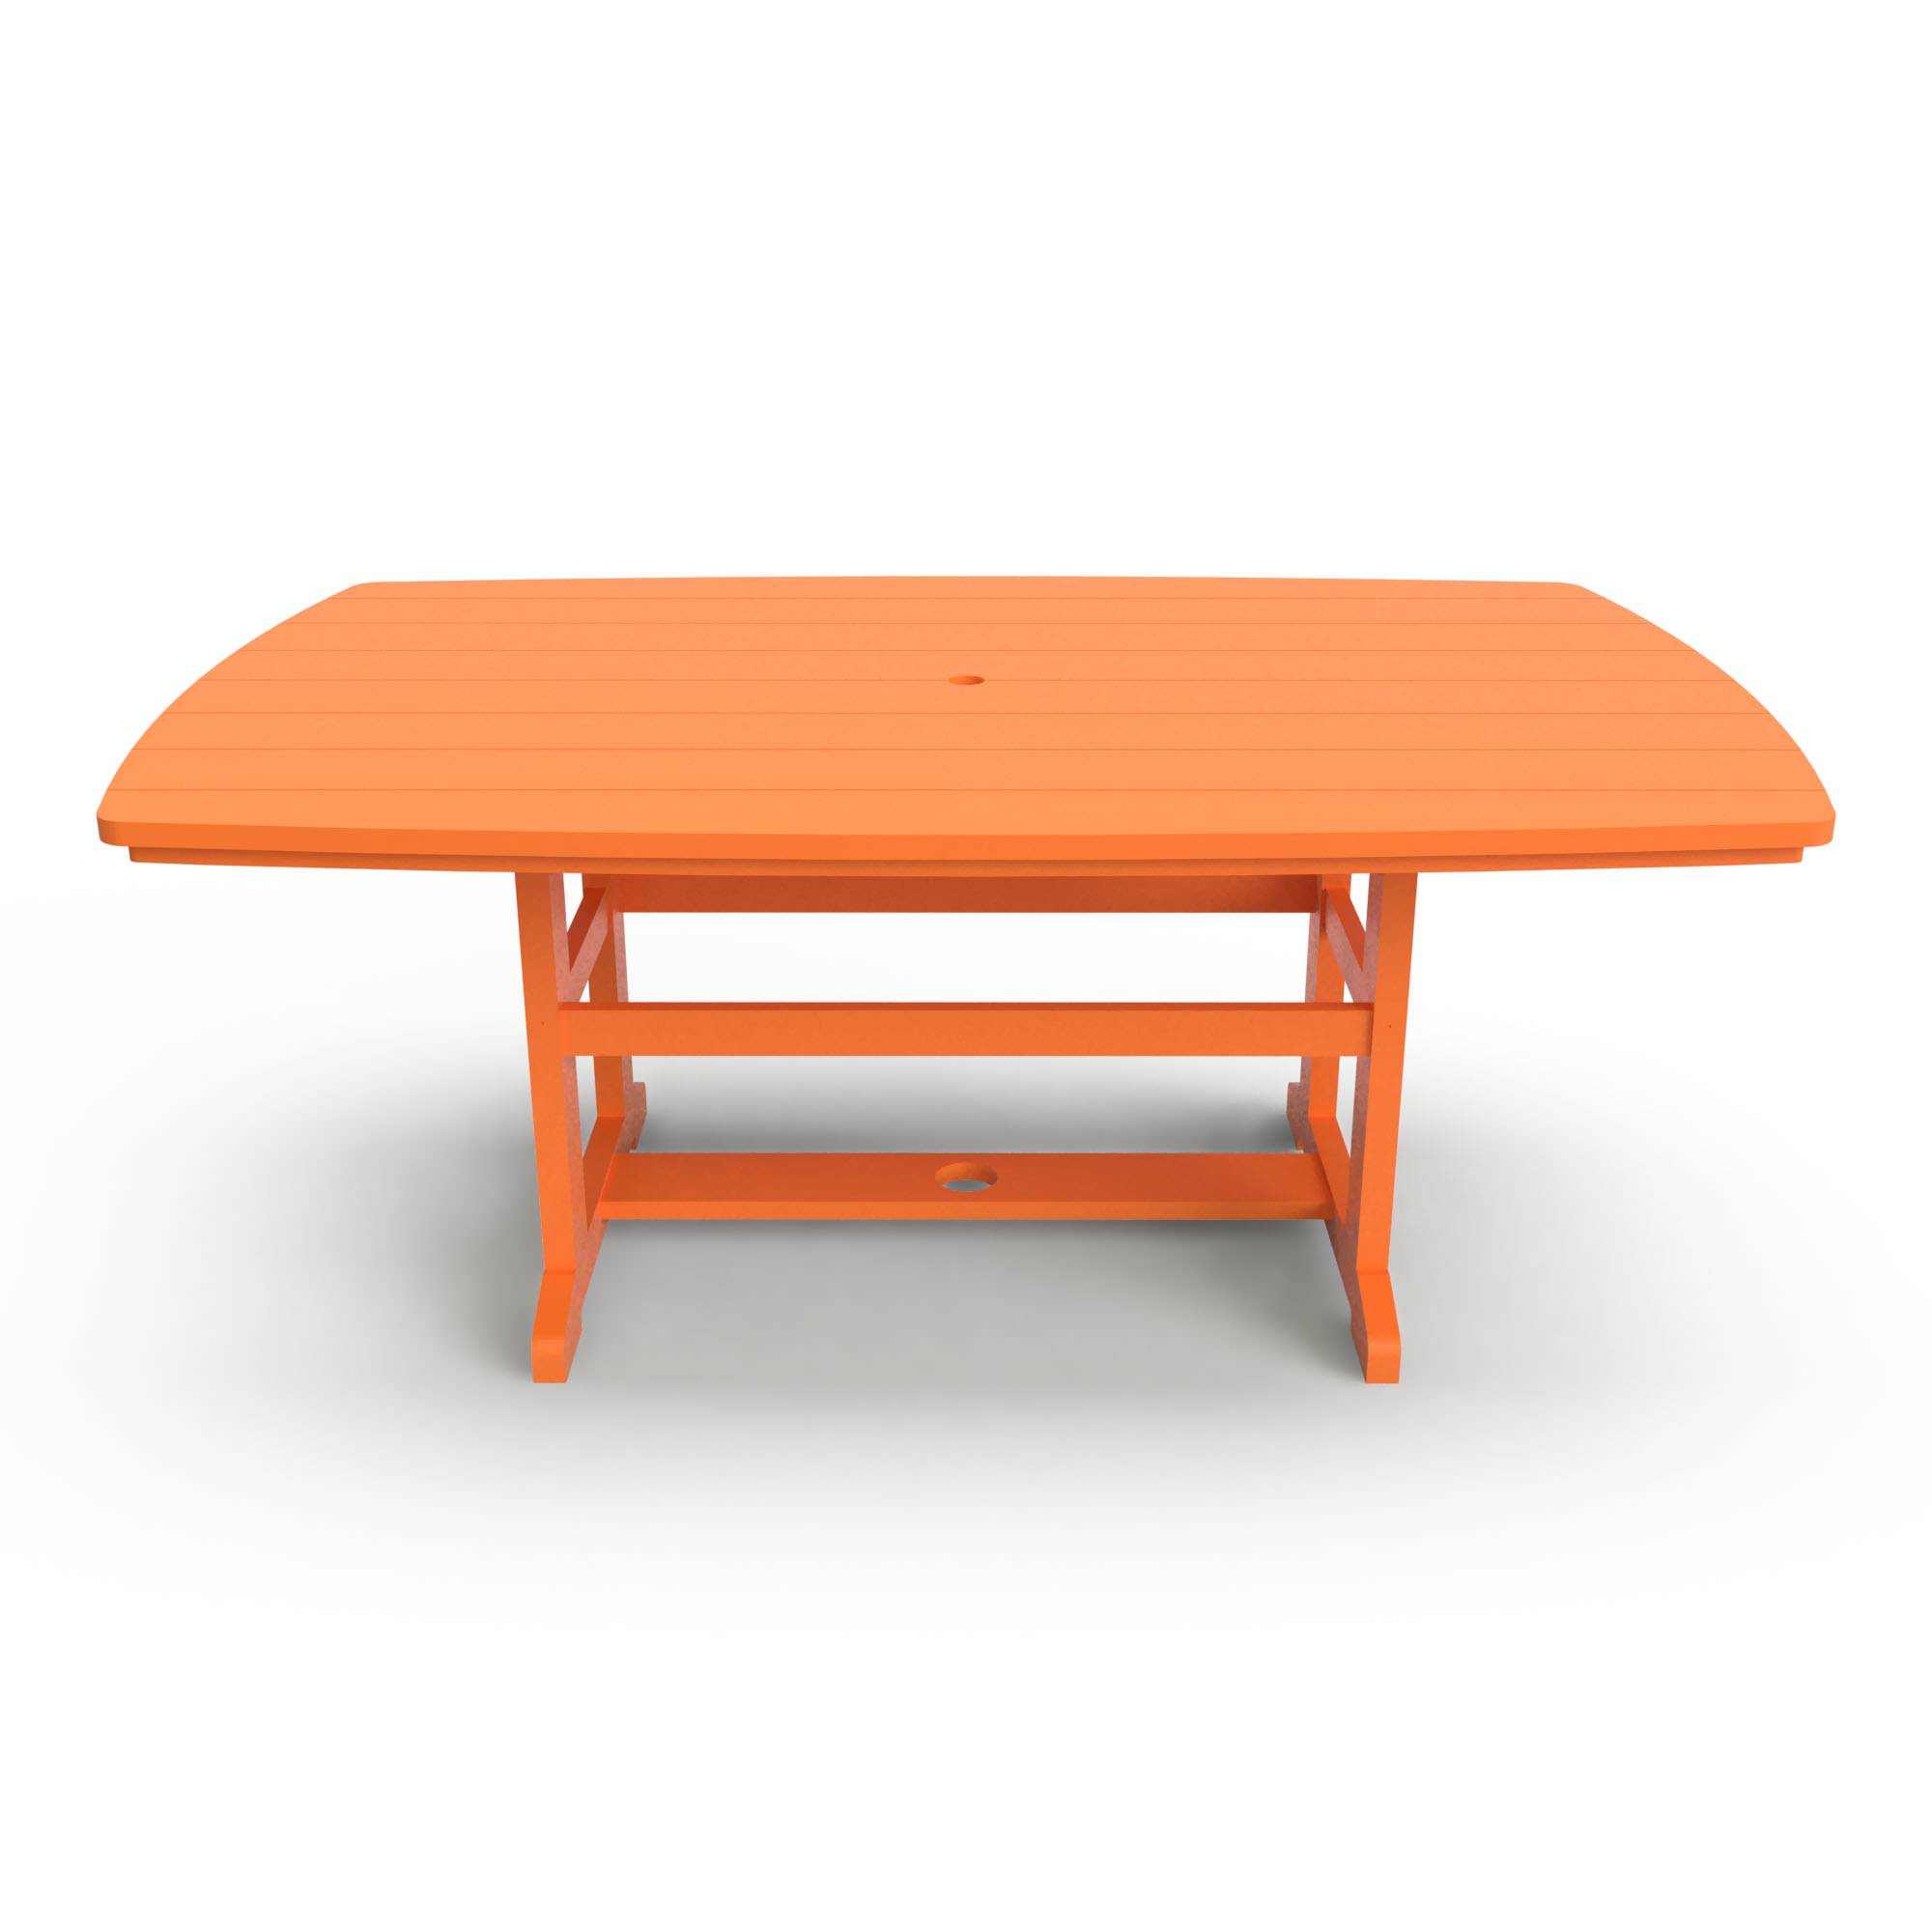 72 inch Orange Durawood Dining Table | Pawleys Island Hammocks